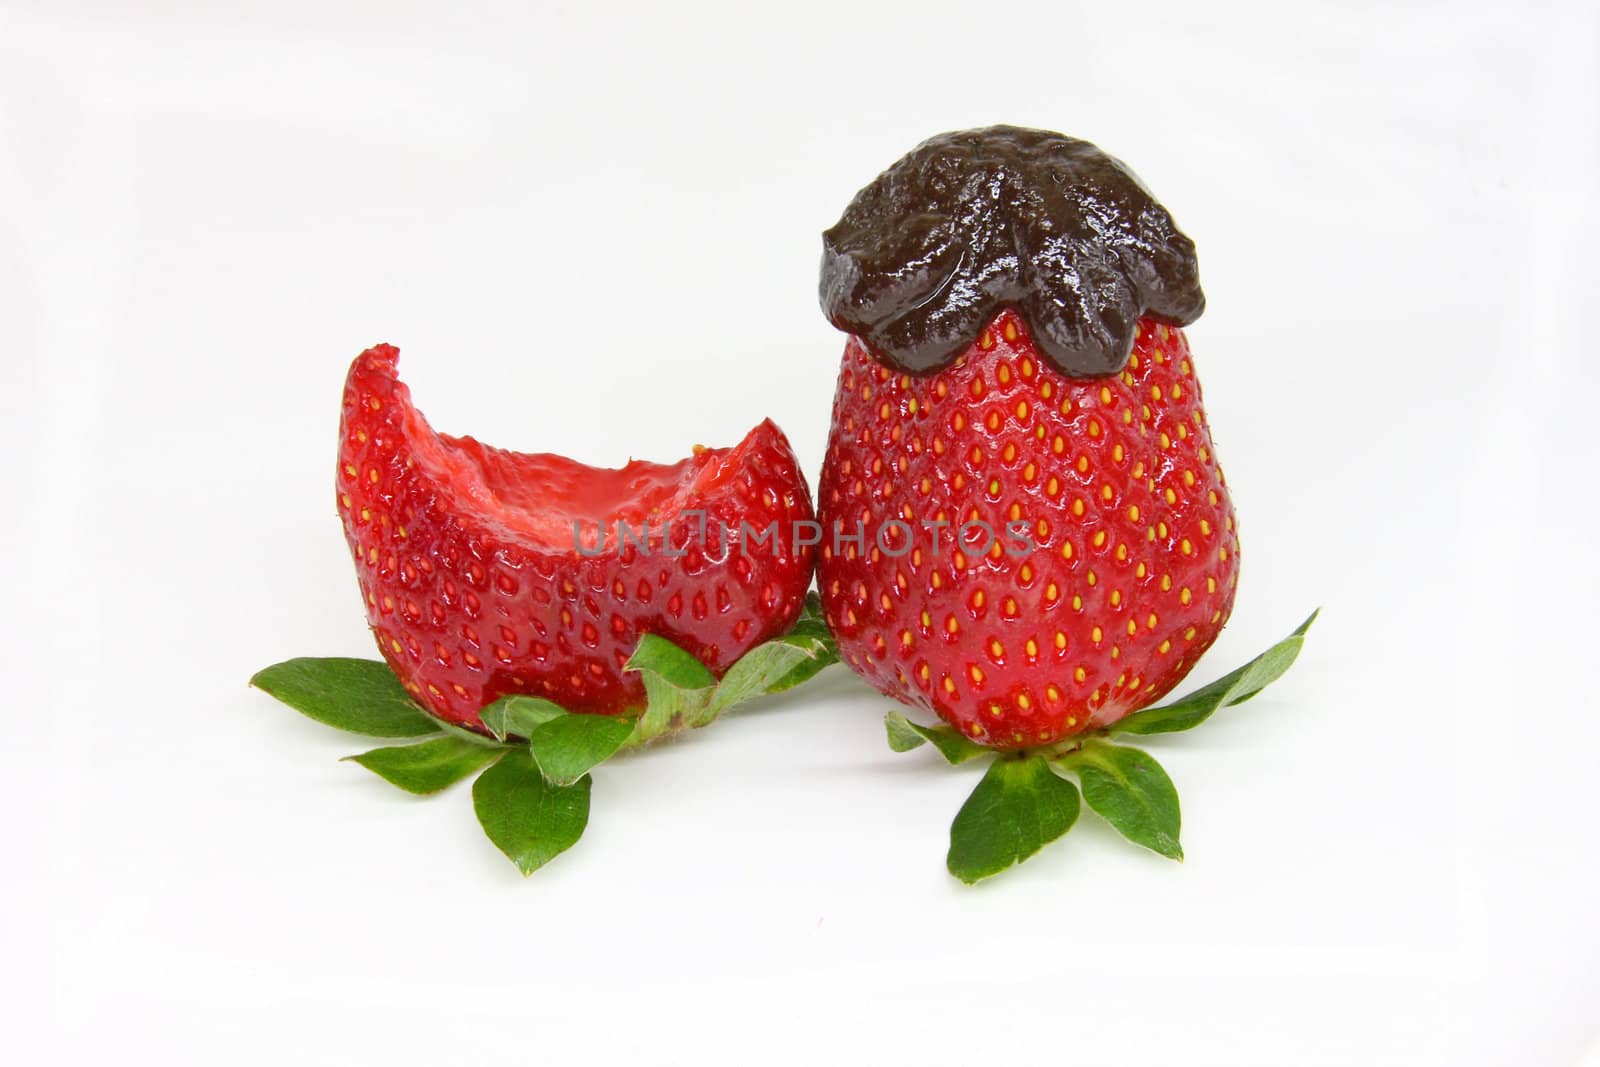 Stawberris by Digoarpi